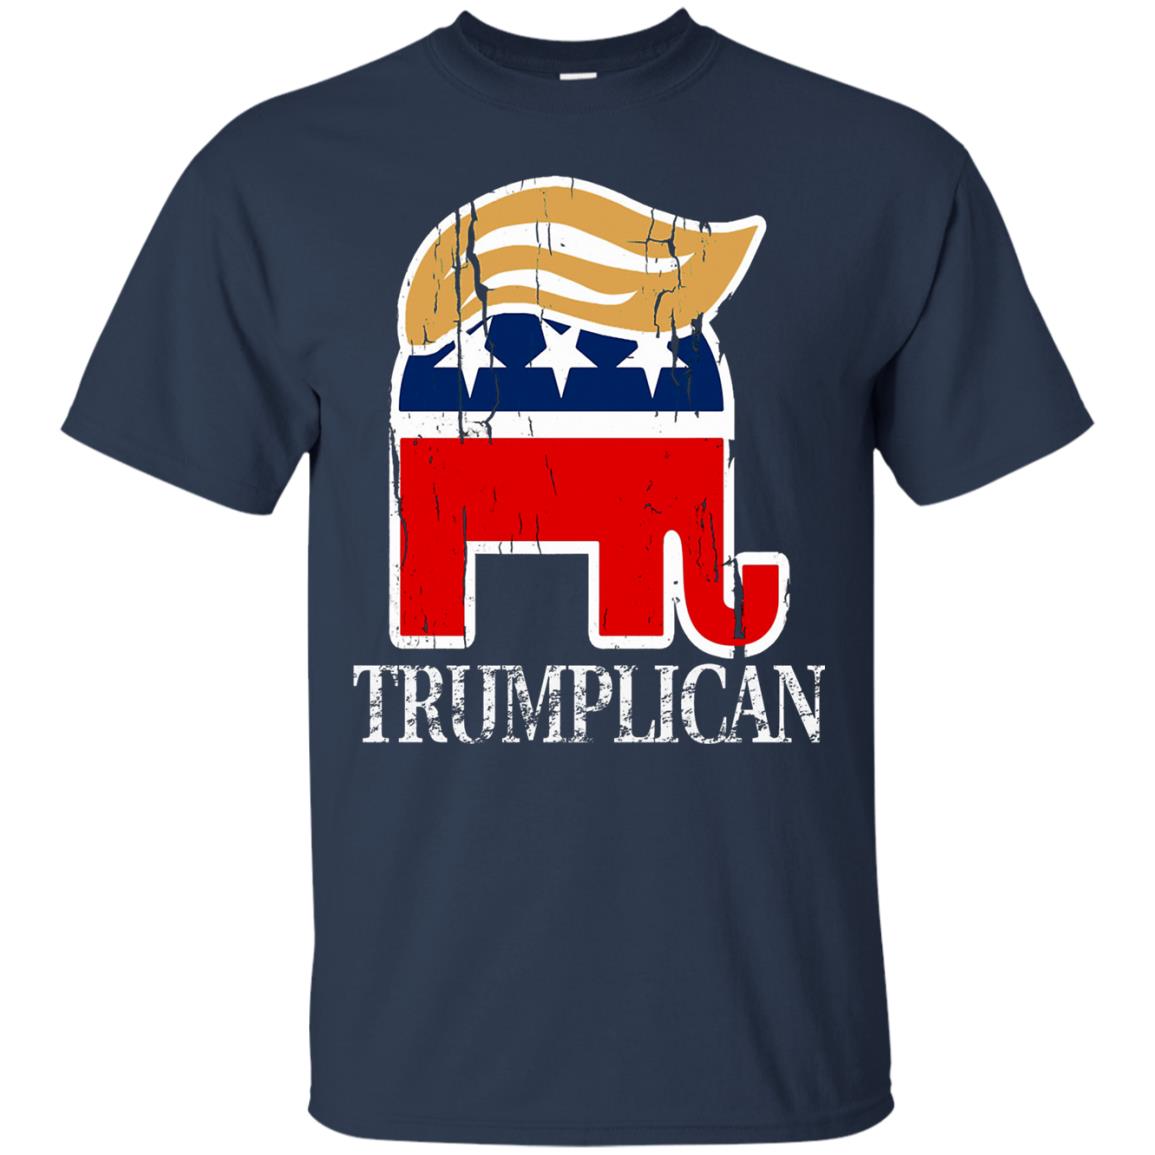 trumplican t shirt - navy blue